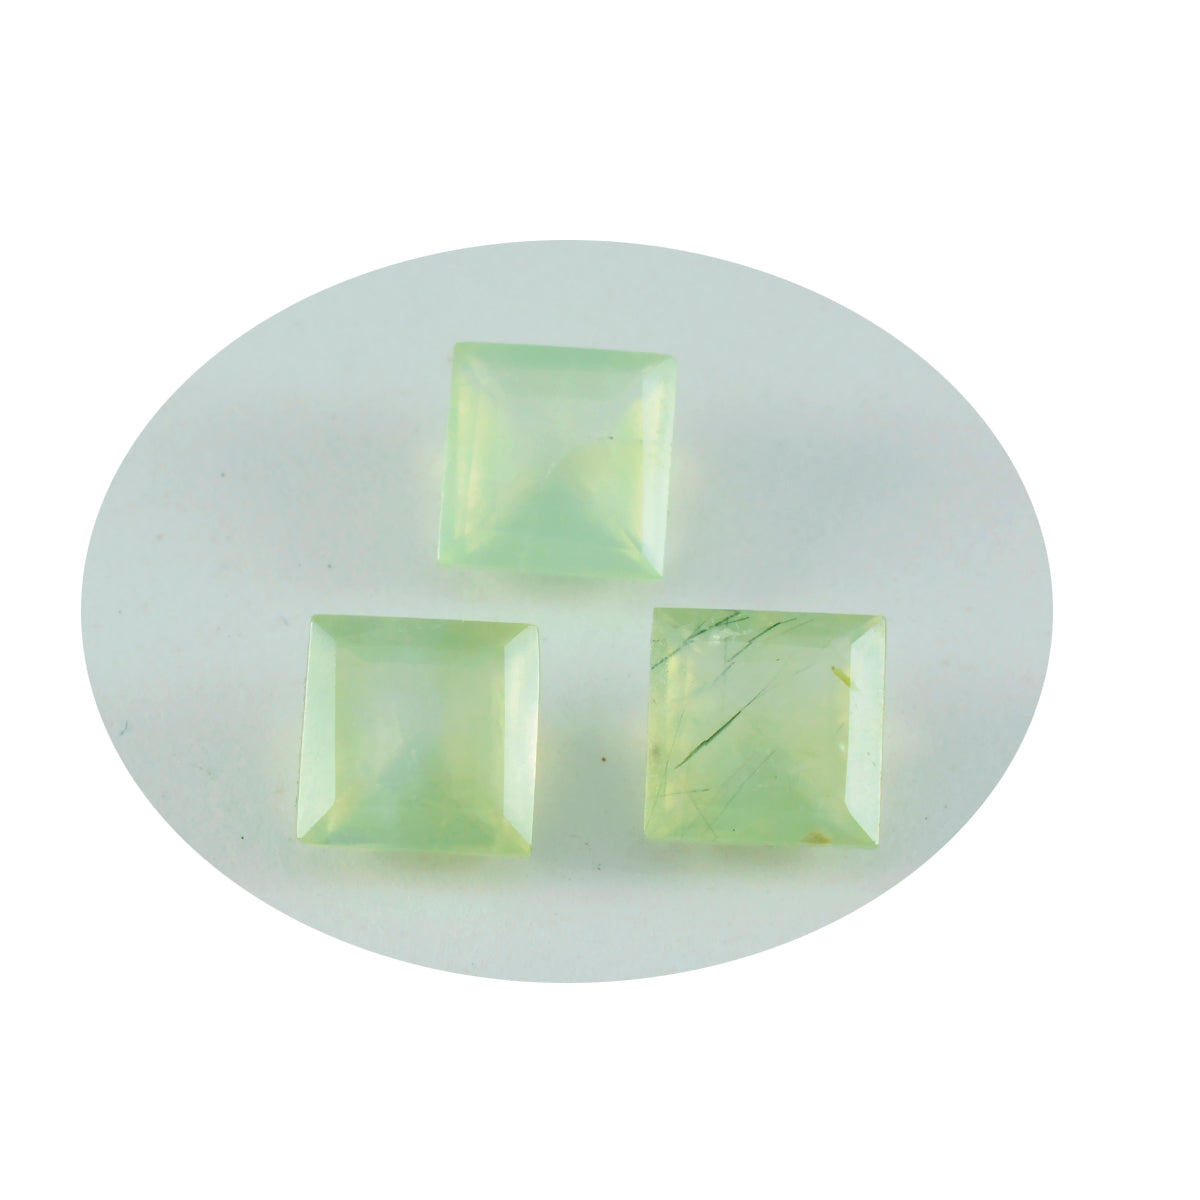 riyogems 1pc グリーン プレナイト ファセット 11x11 mm 正方形の形状の驚くべき品質のルース宝石